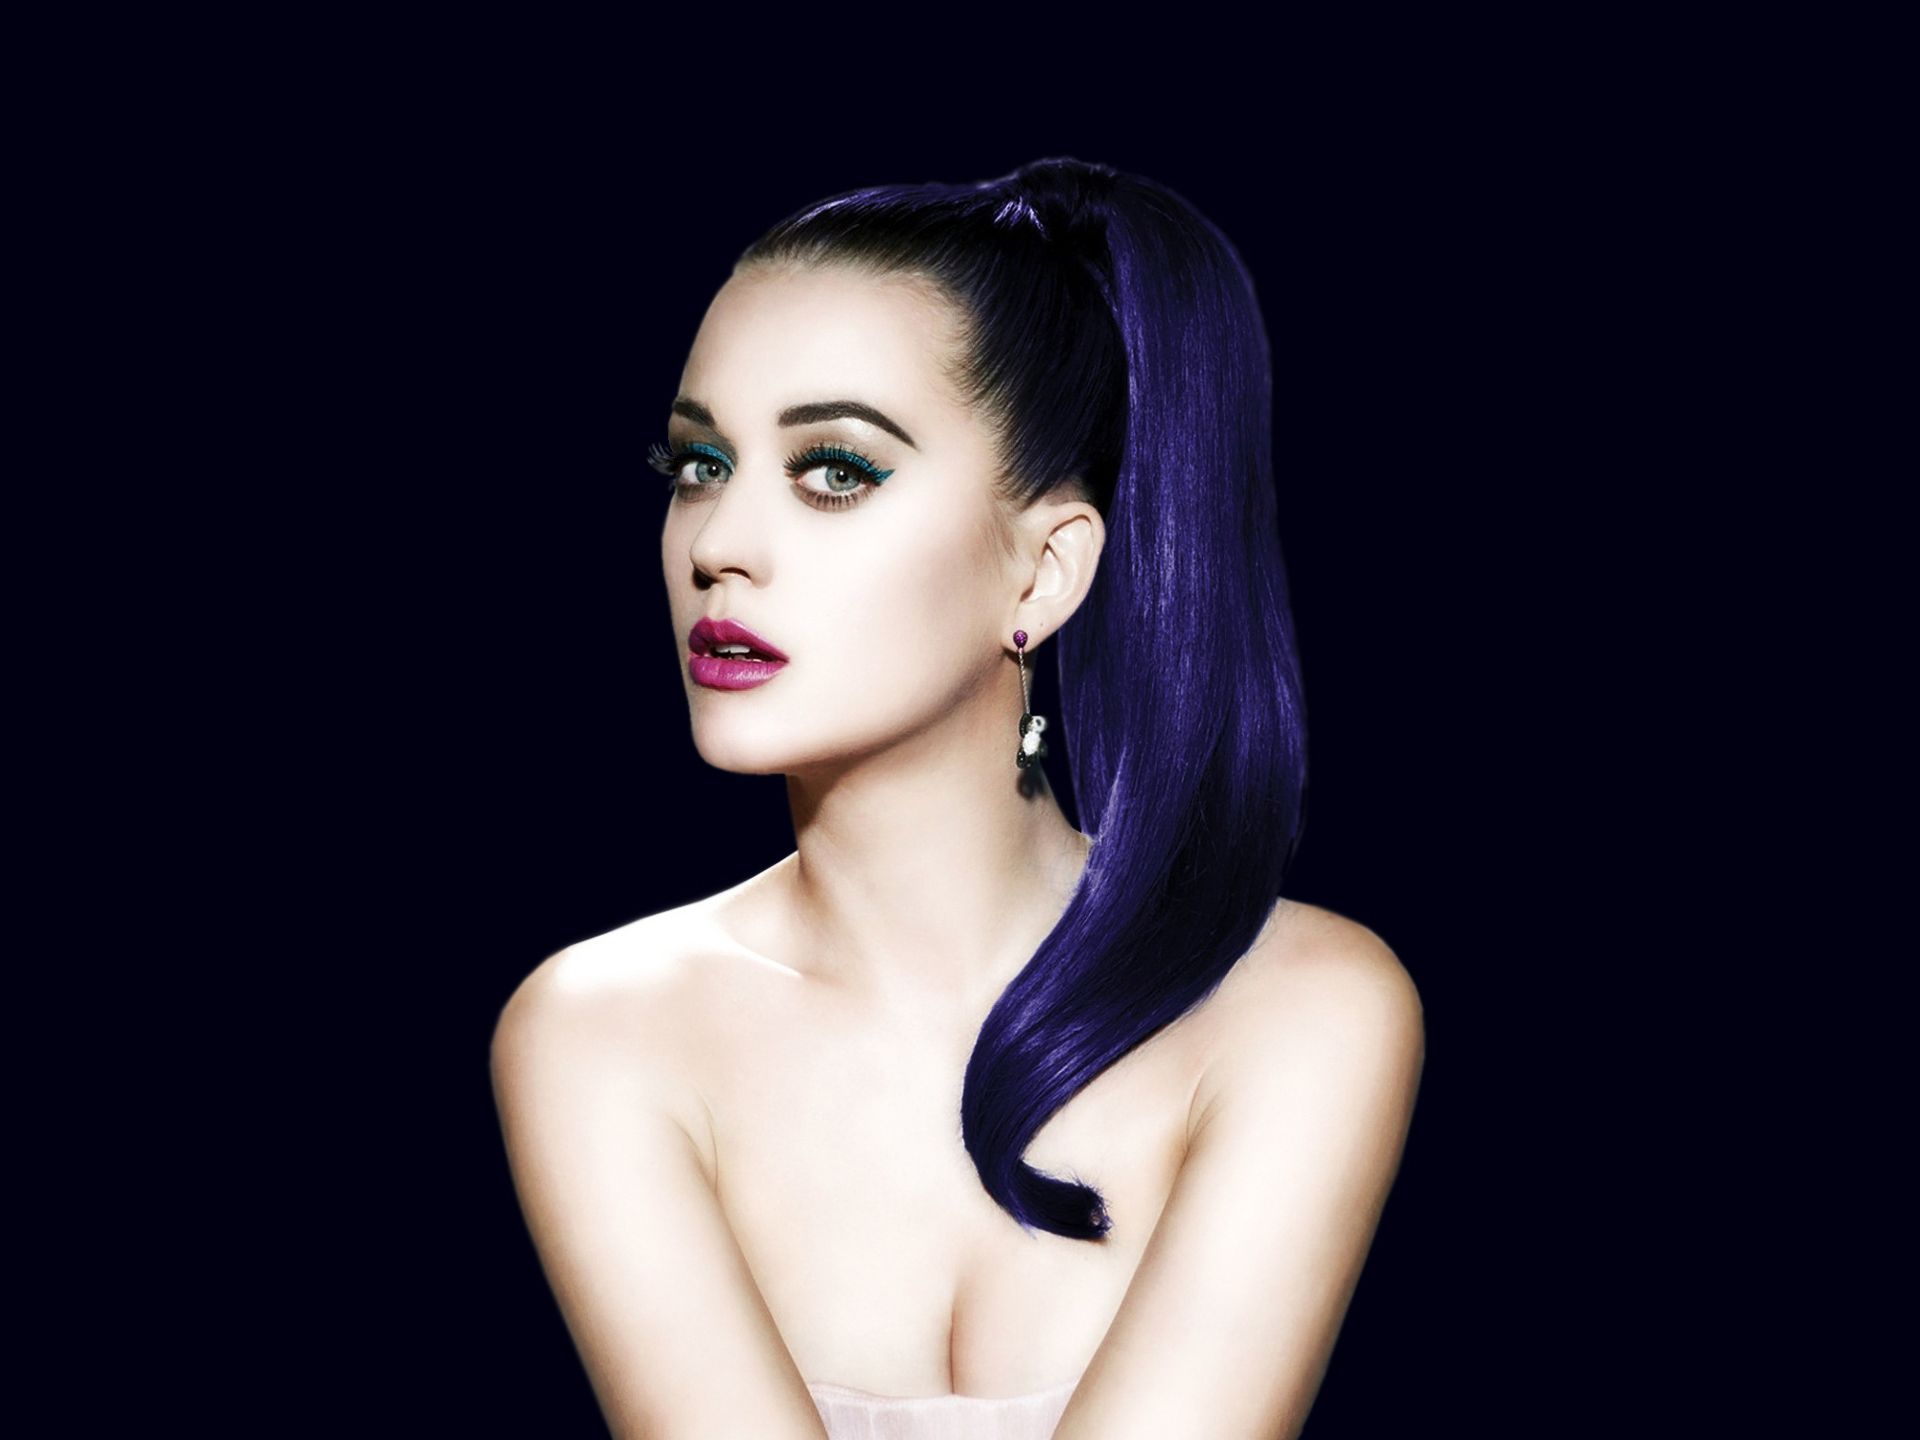 Fondos de pantalla de Katy Perry - FondosMil